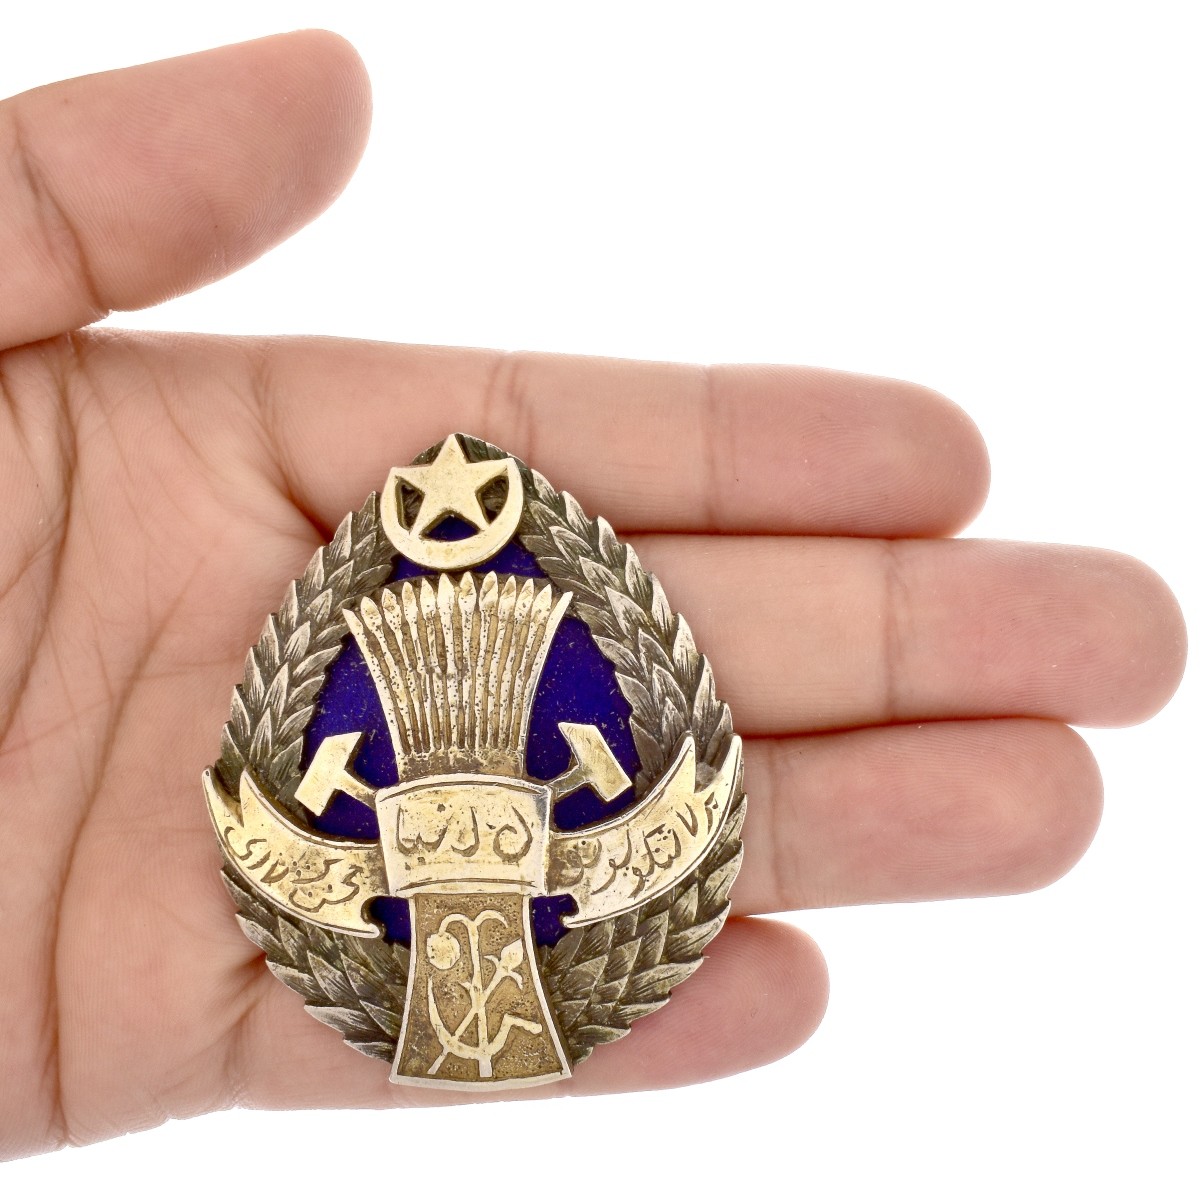 Russian/Muslim Silver and Enamel Badge